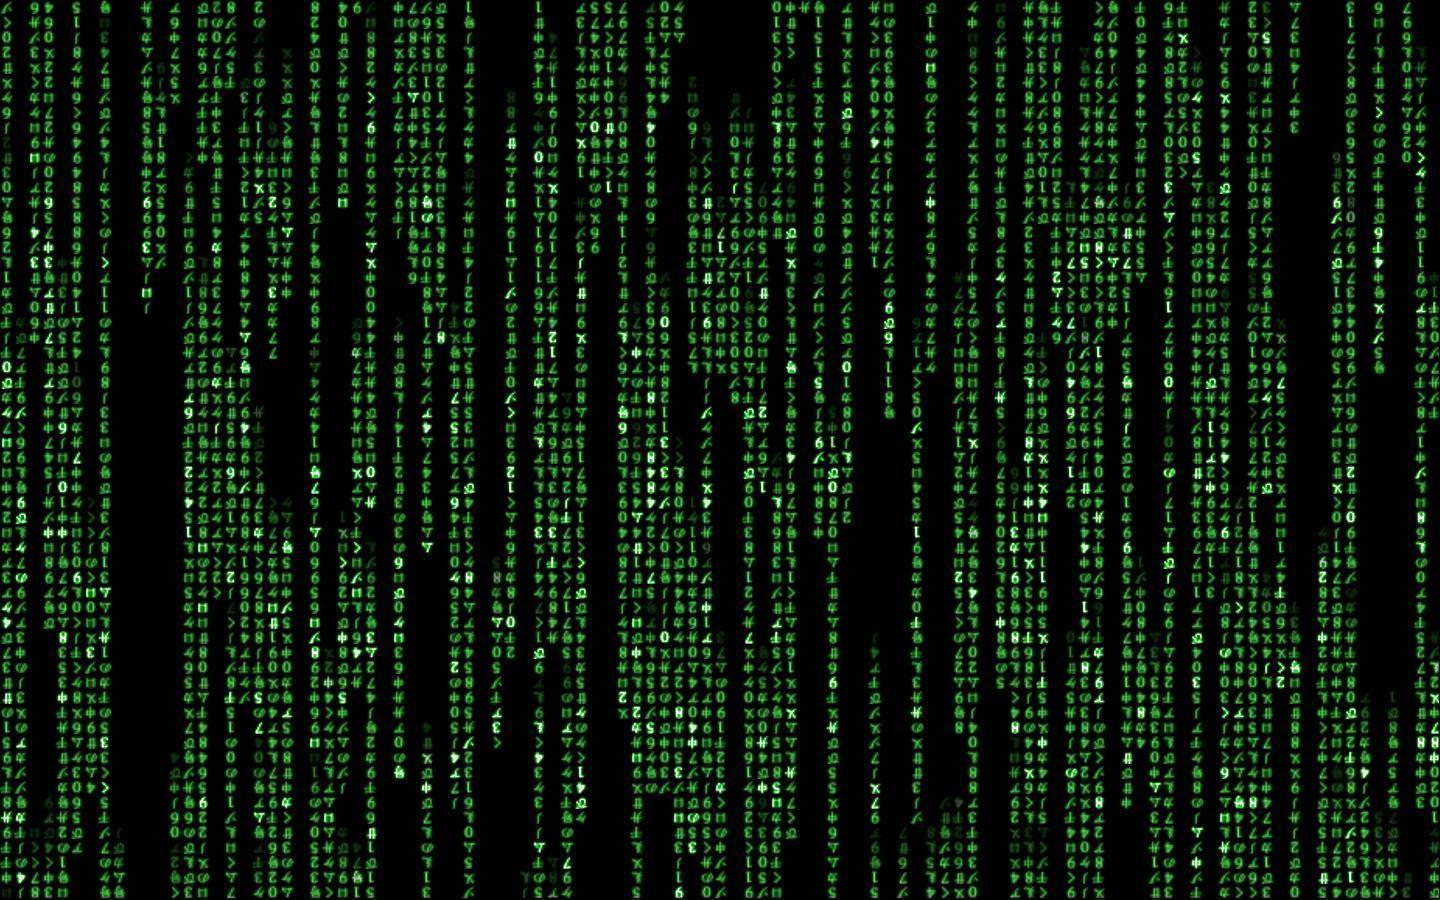 Matrix Code Movie Wallpaper Backgrounds 1440x900PX ~ Wallpapers